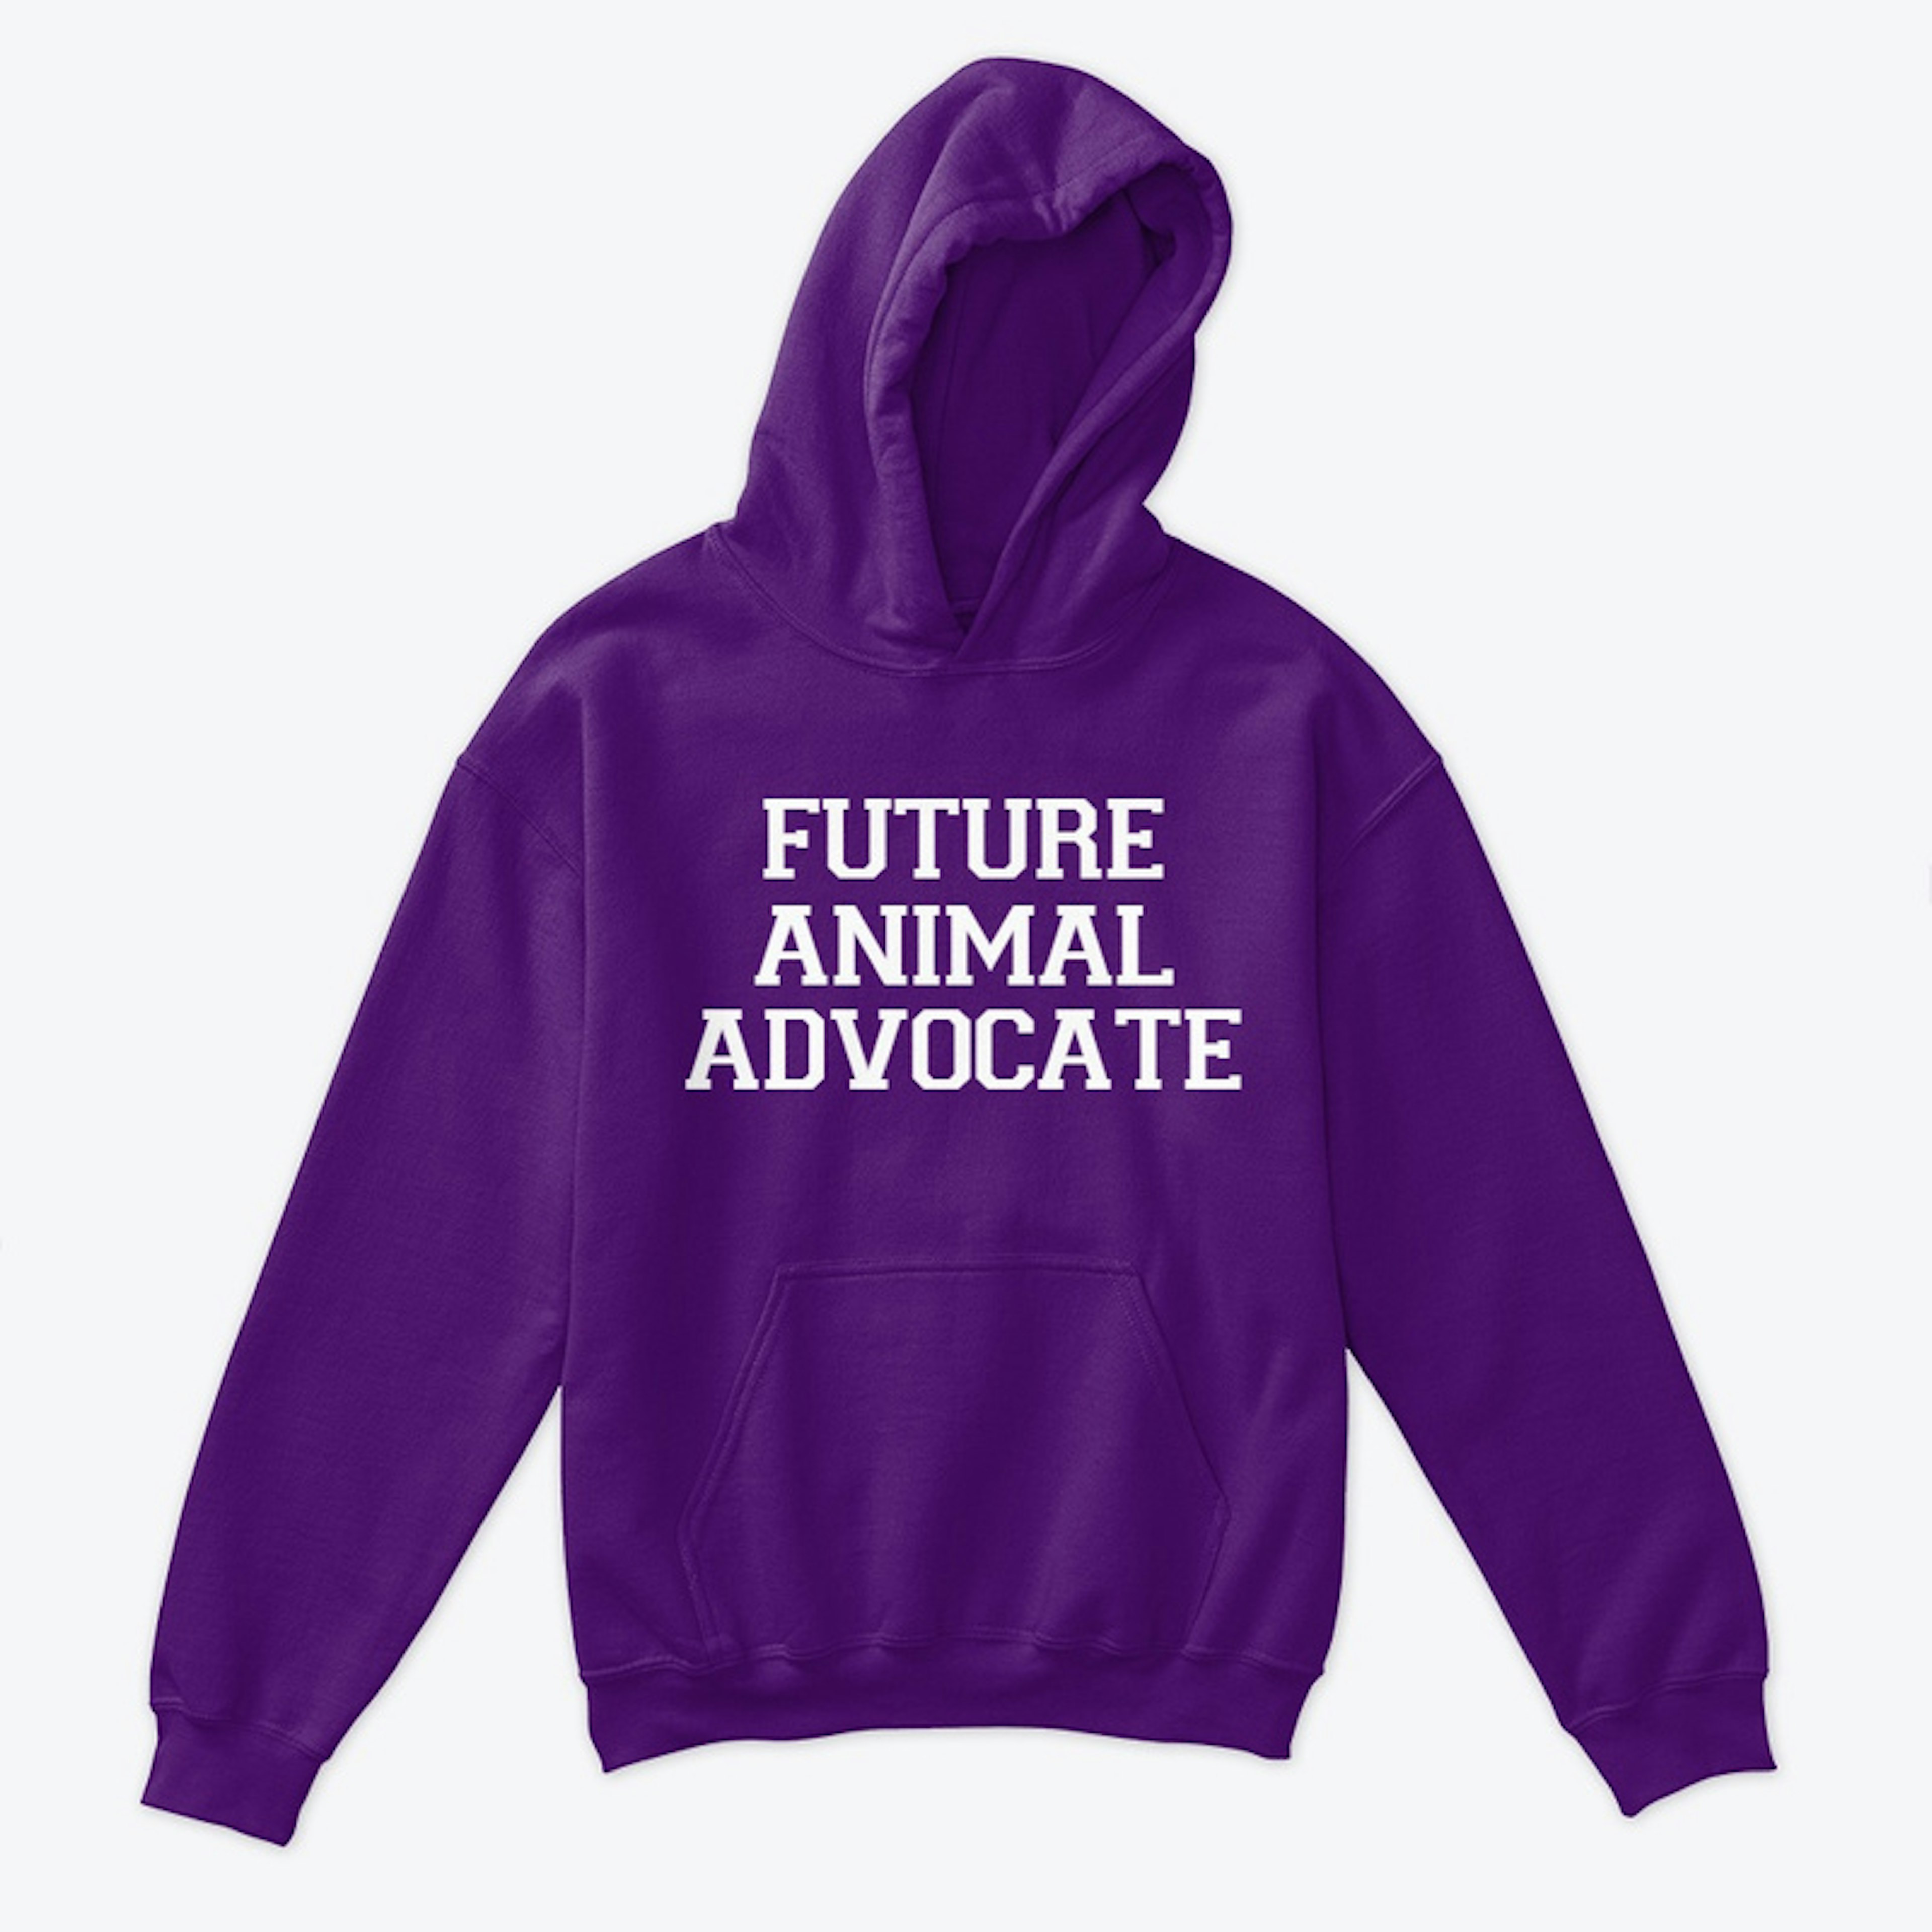 Future Animal Advocate!